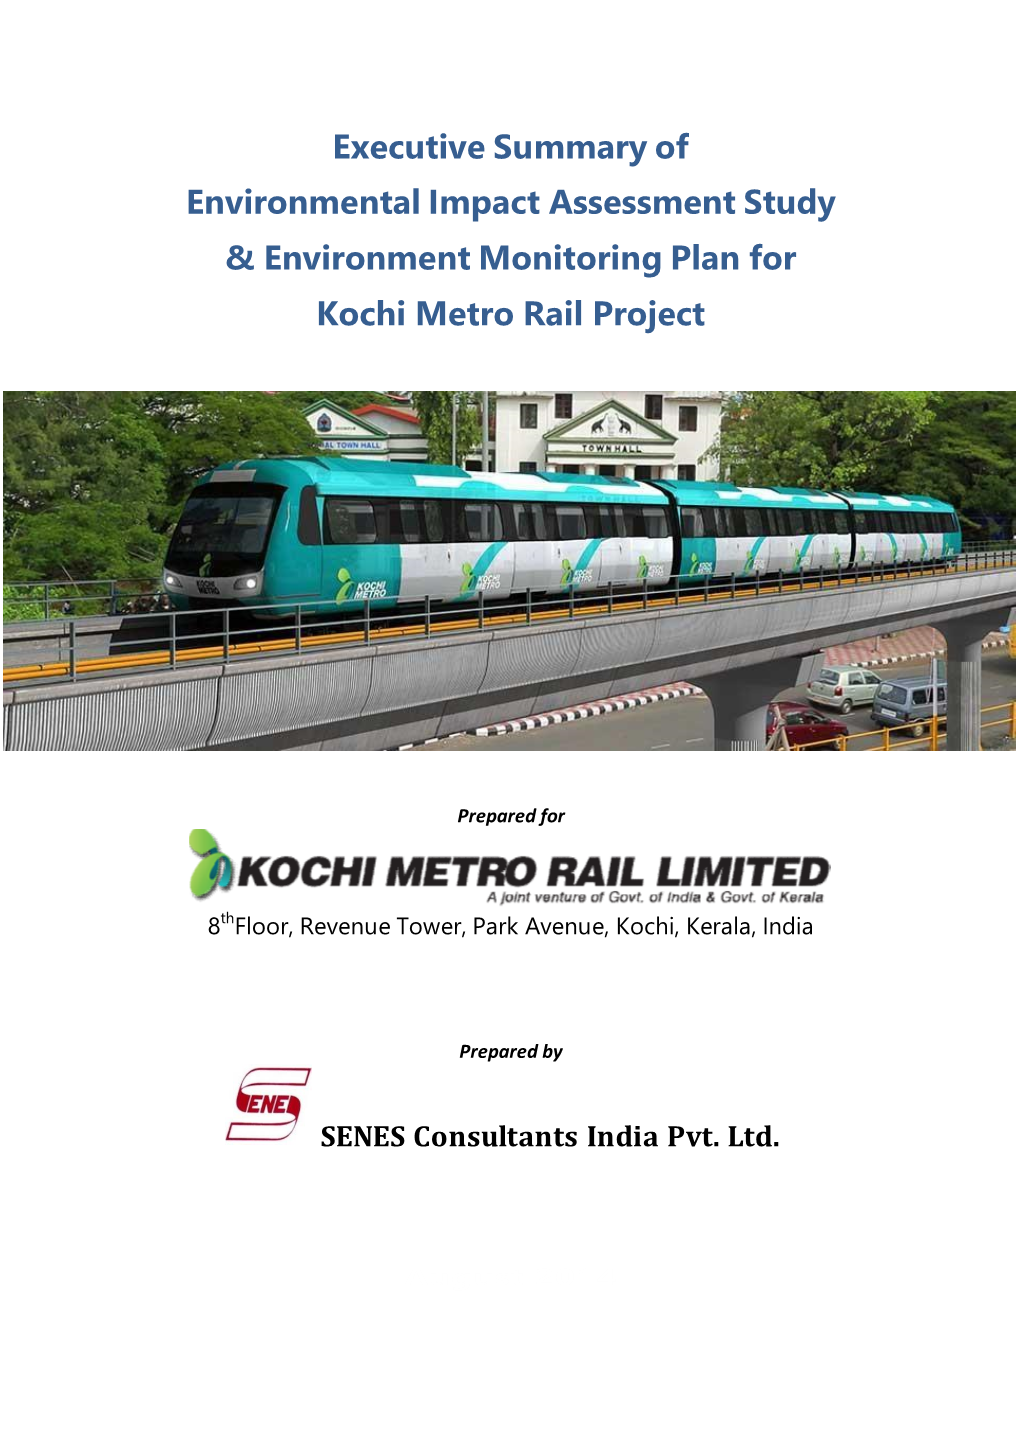 Executive Summary of Environmental Impact Assessment Study & Environment Monitoring Plan for Kochi Metro Rail Project